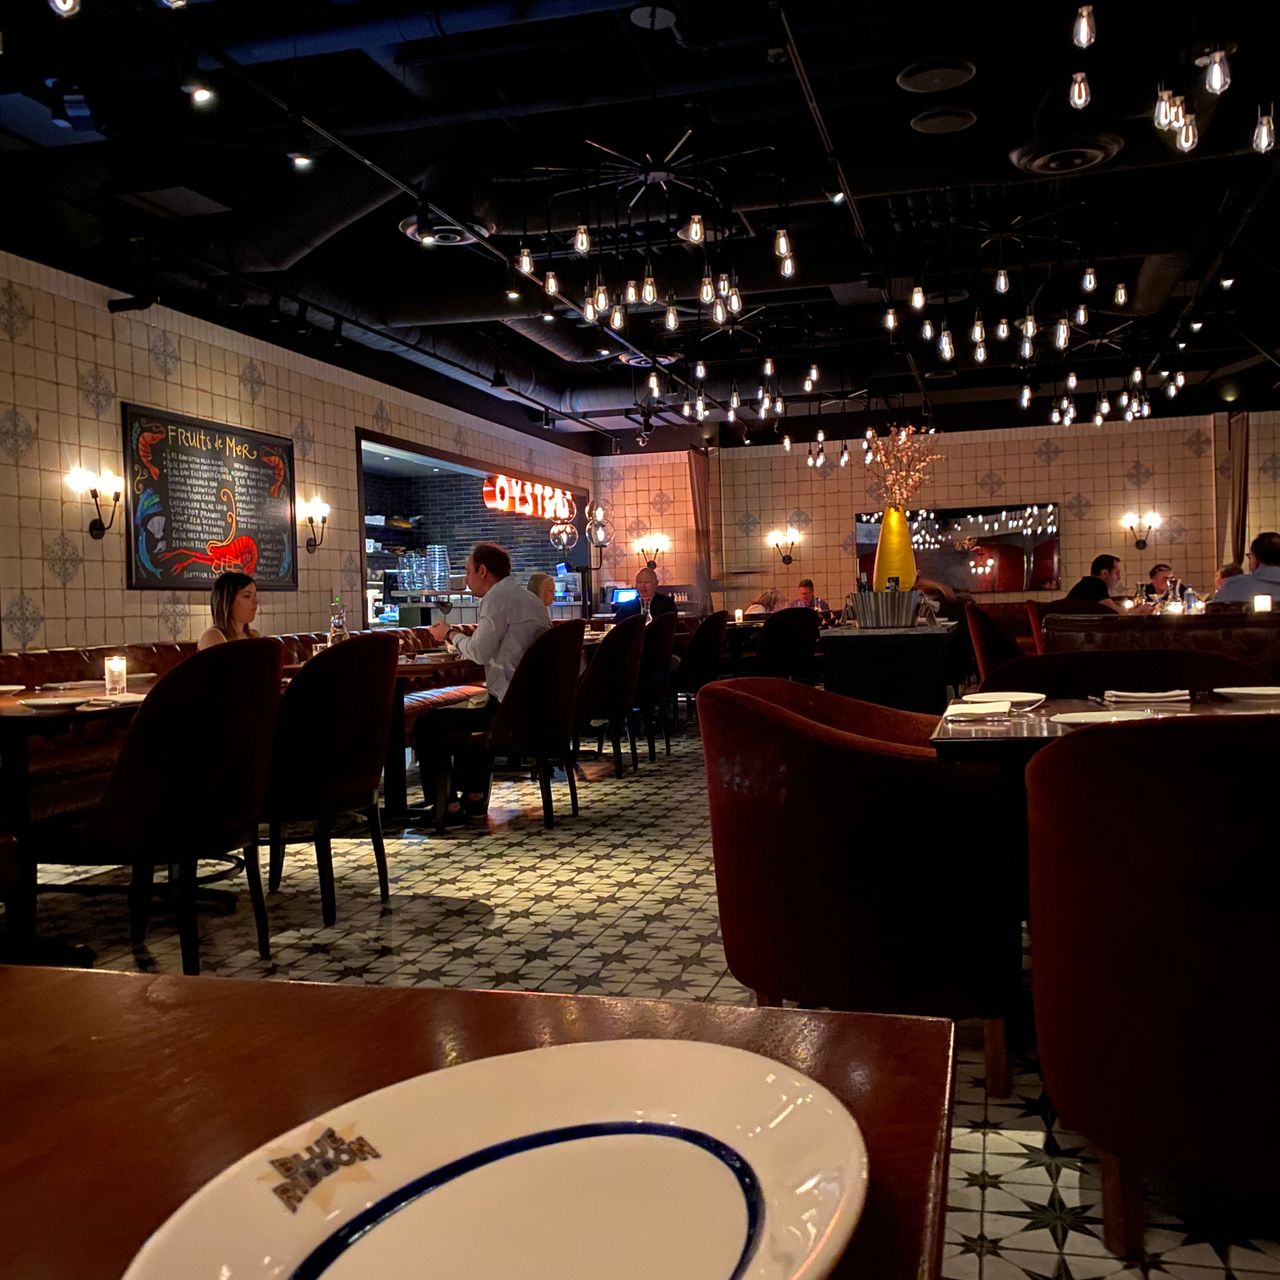 Blue Ribbon, Las Vegas, Nevada, U.S. - Restaurant Review